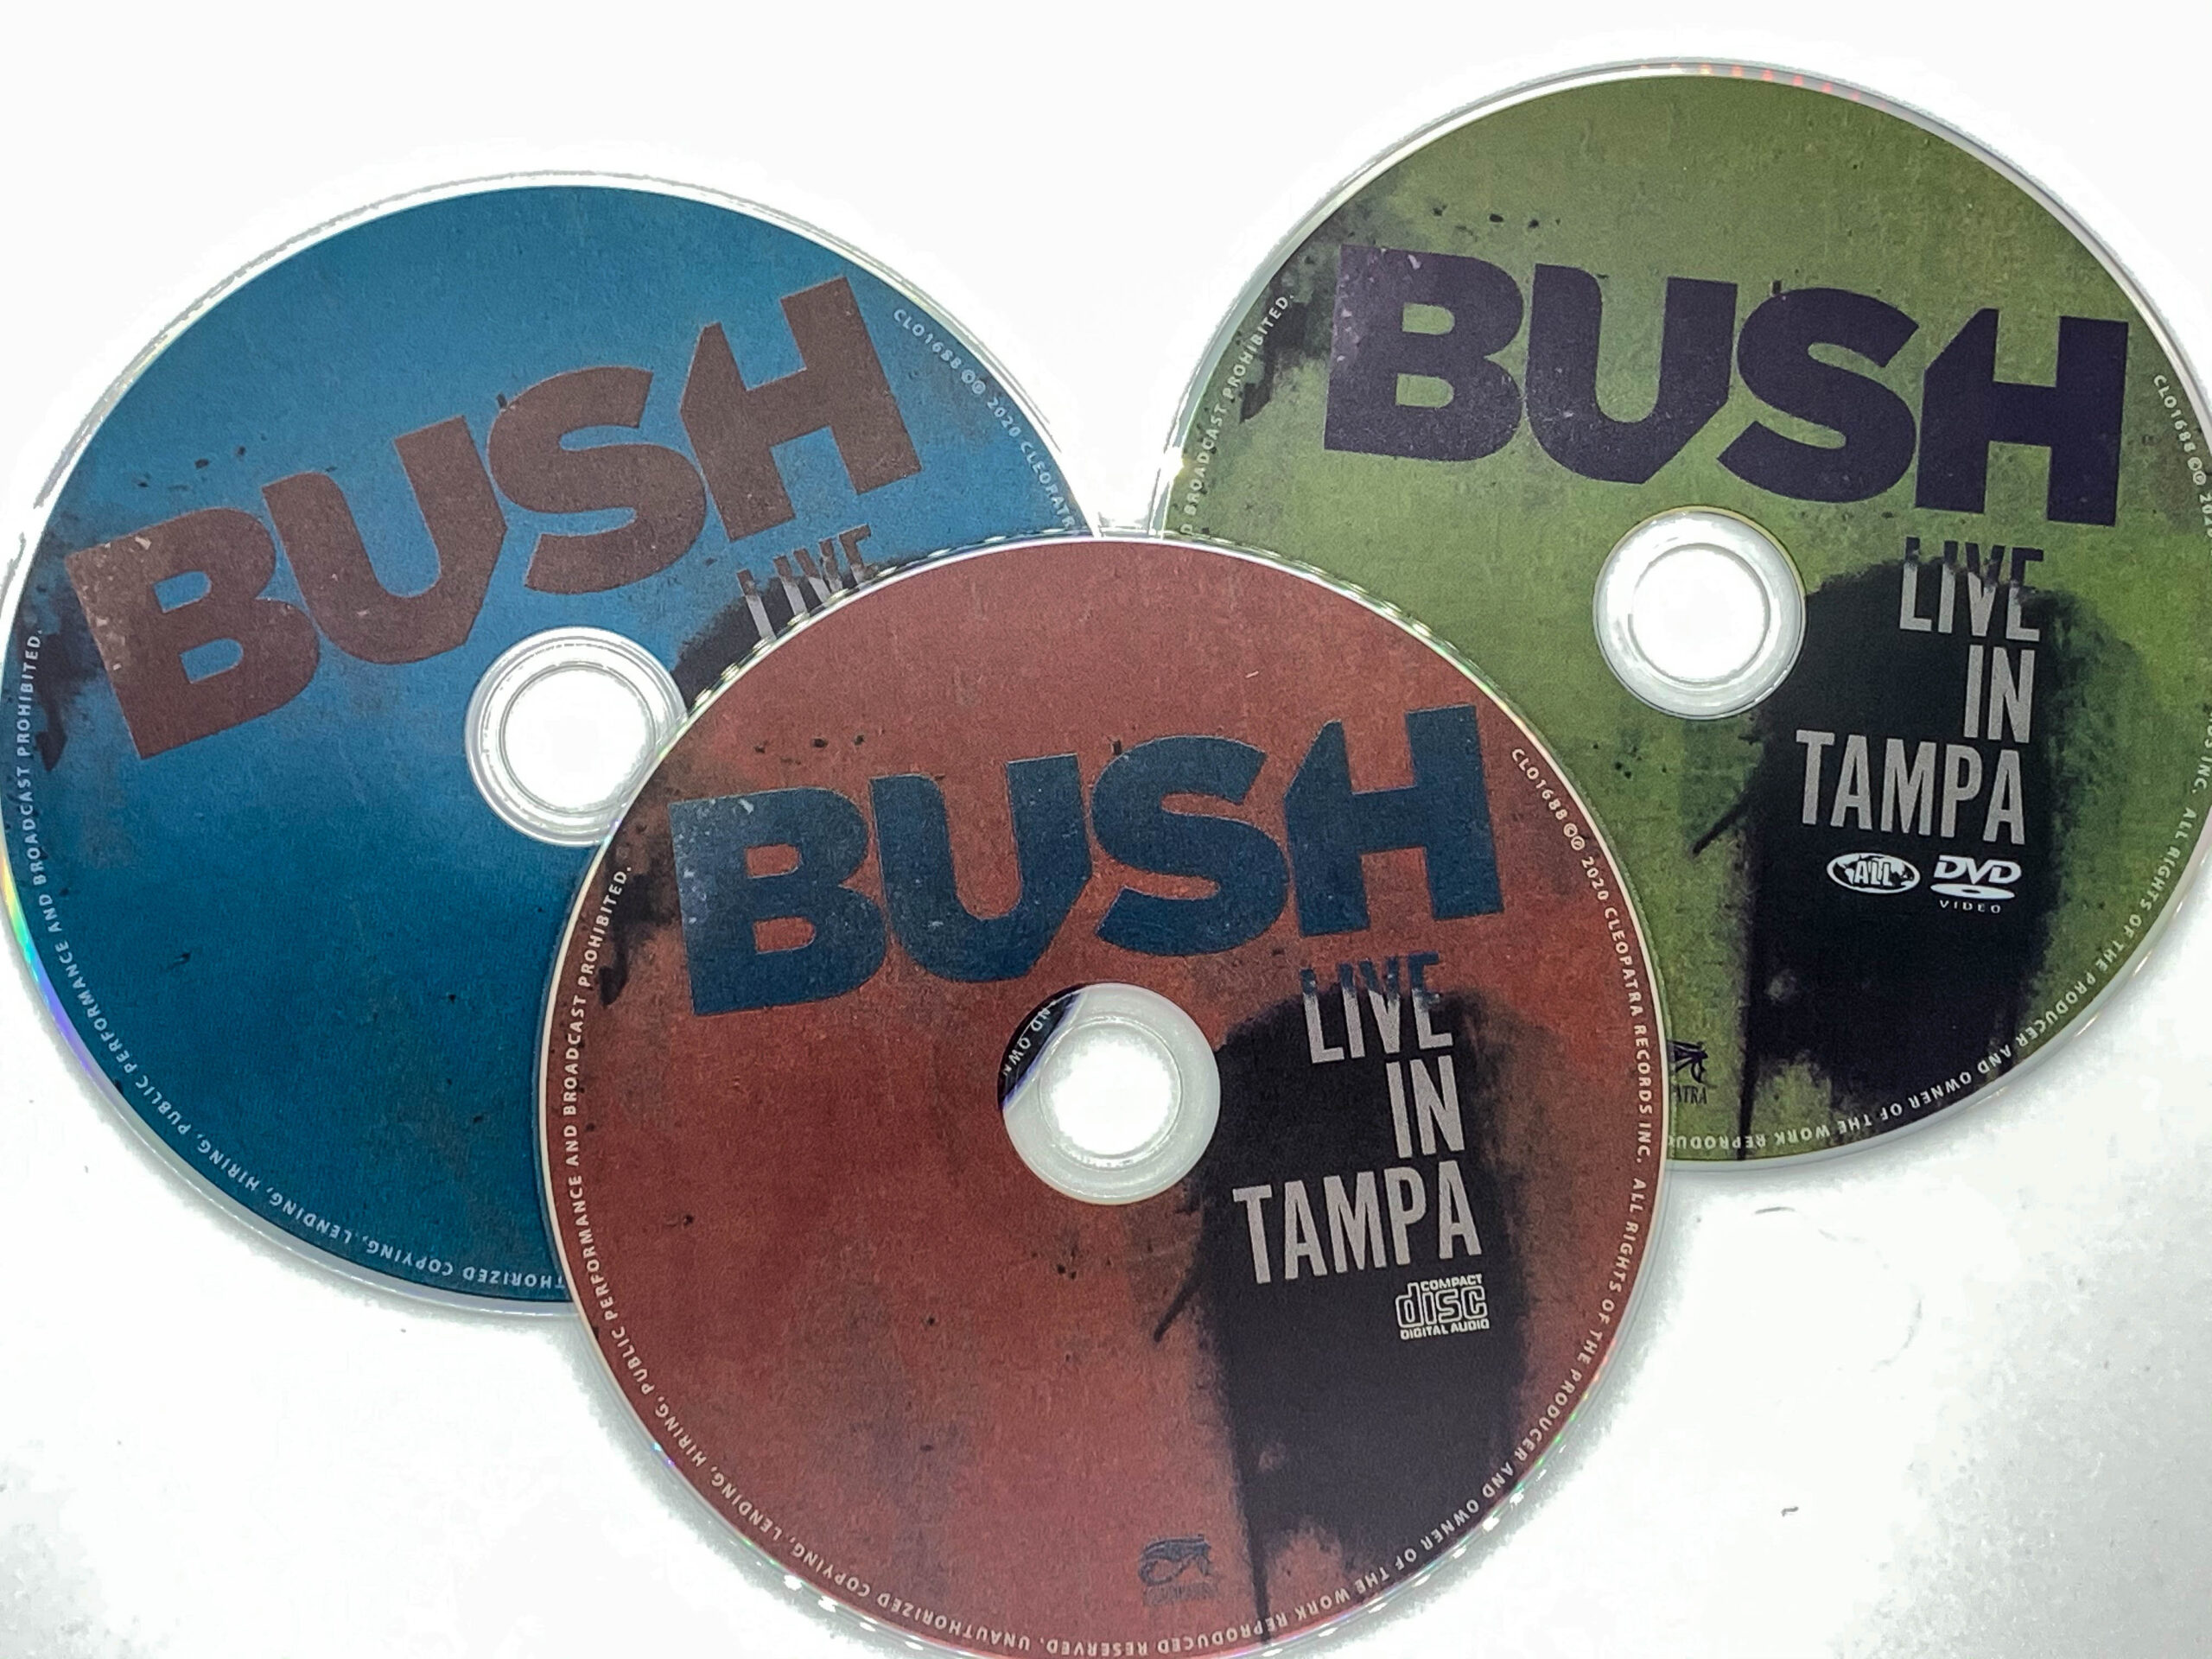 Bush Bluray, DVD and CD live album